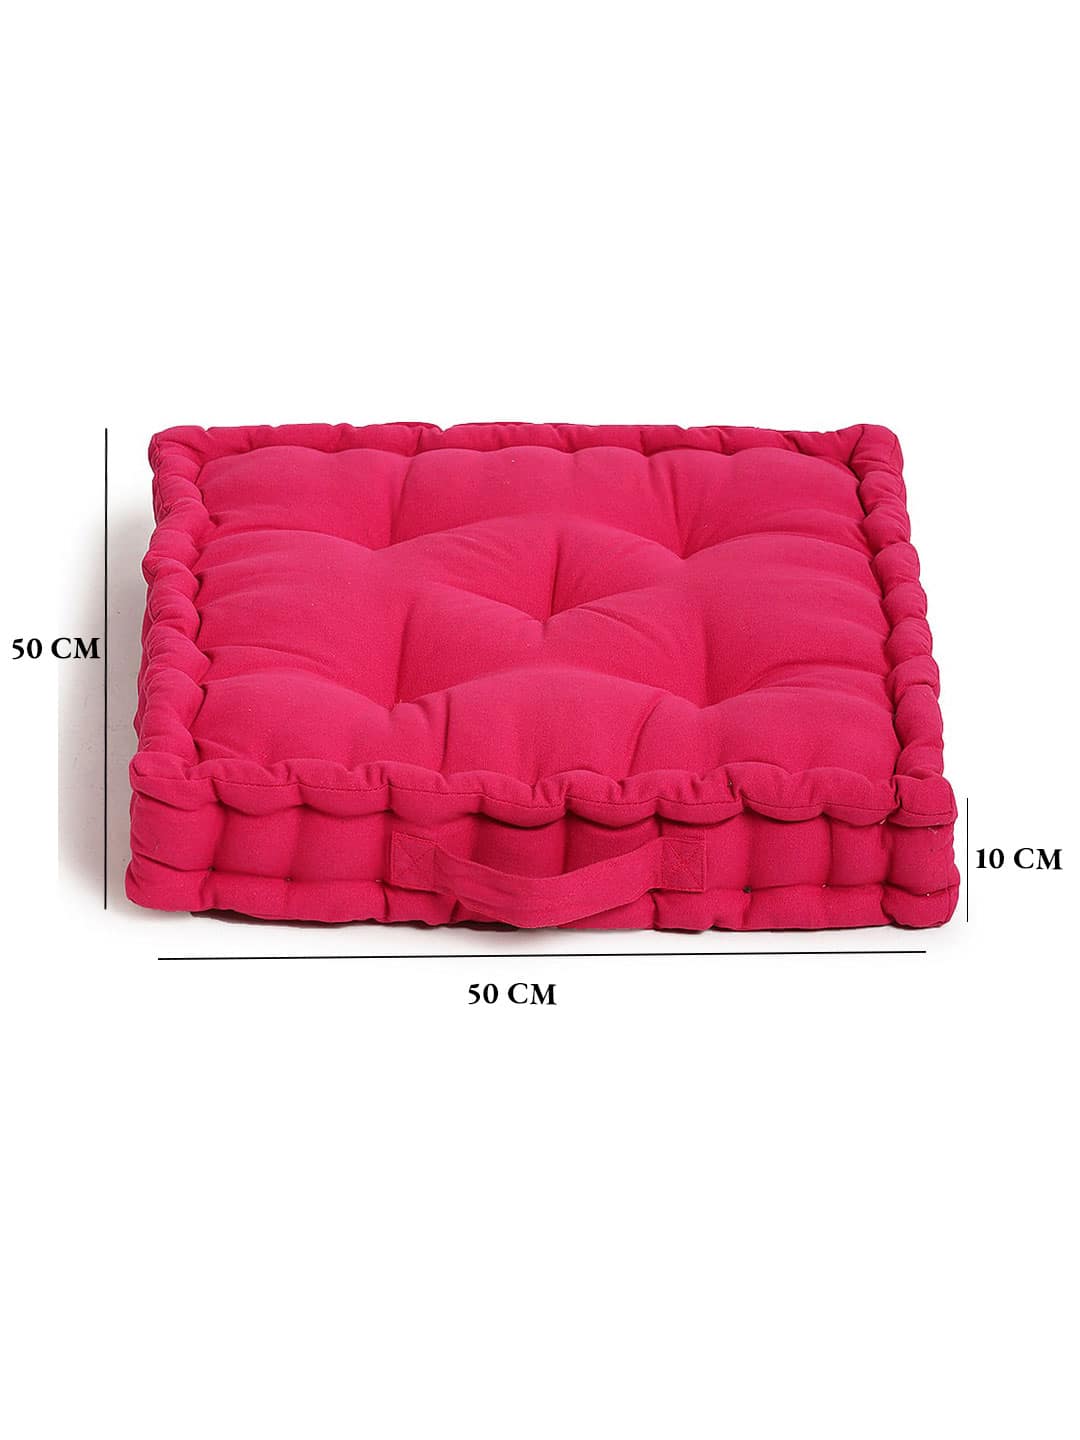 Set of 2 Pink & Green Matlas Floor Cushion